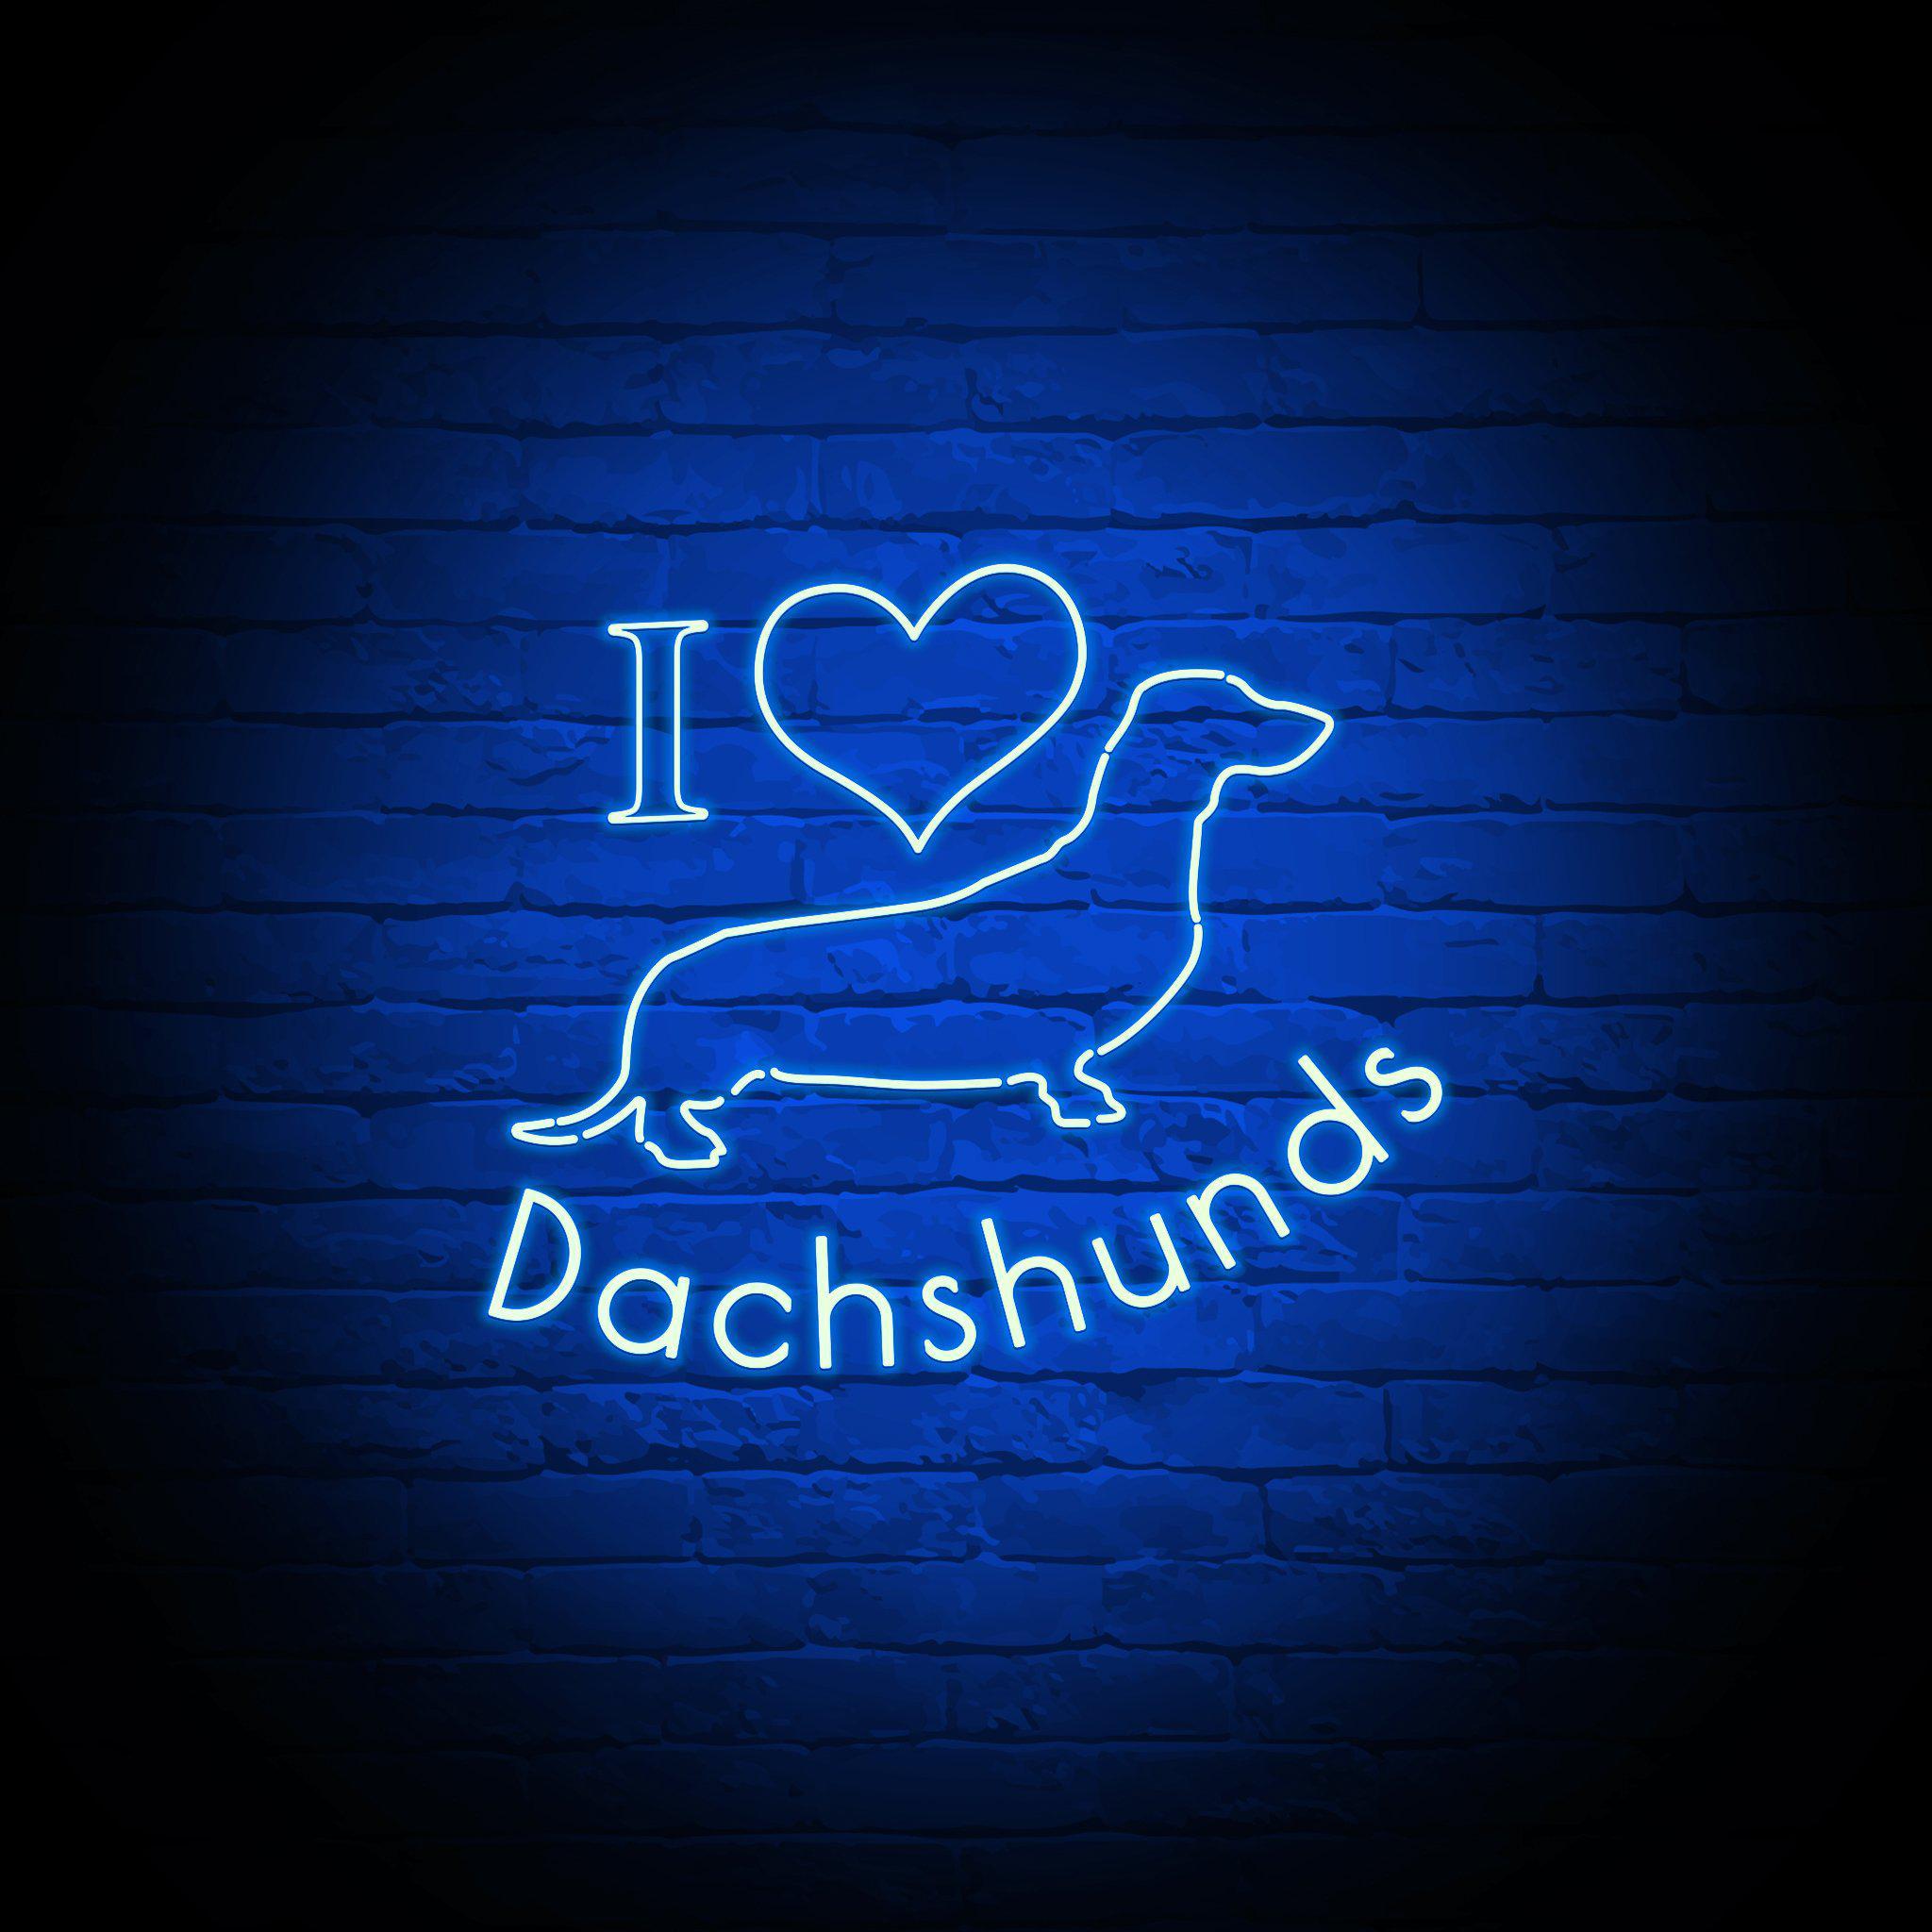 'I LOVE DACHSHUNDS' NEON SIGN